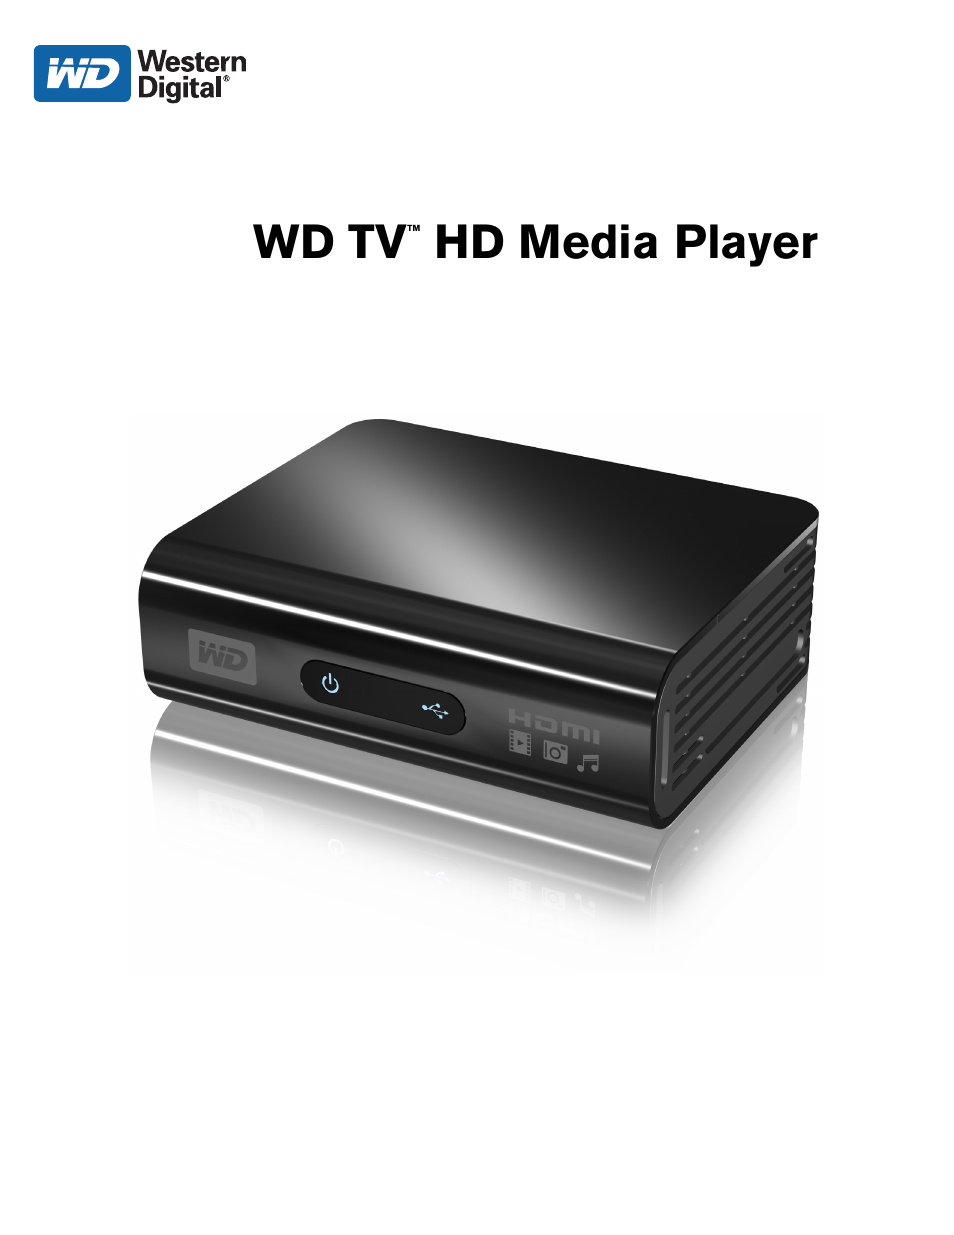 Western Digital WD TV HD Media Player (Gen 1) User Manual User Manual | 81 pages